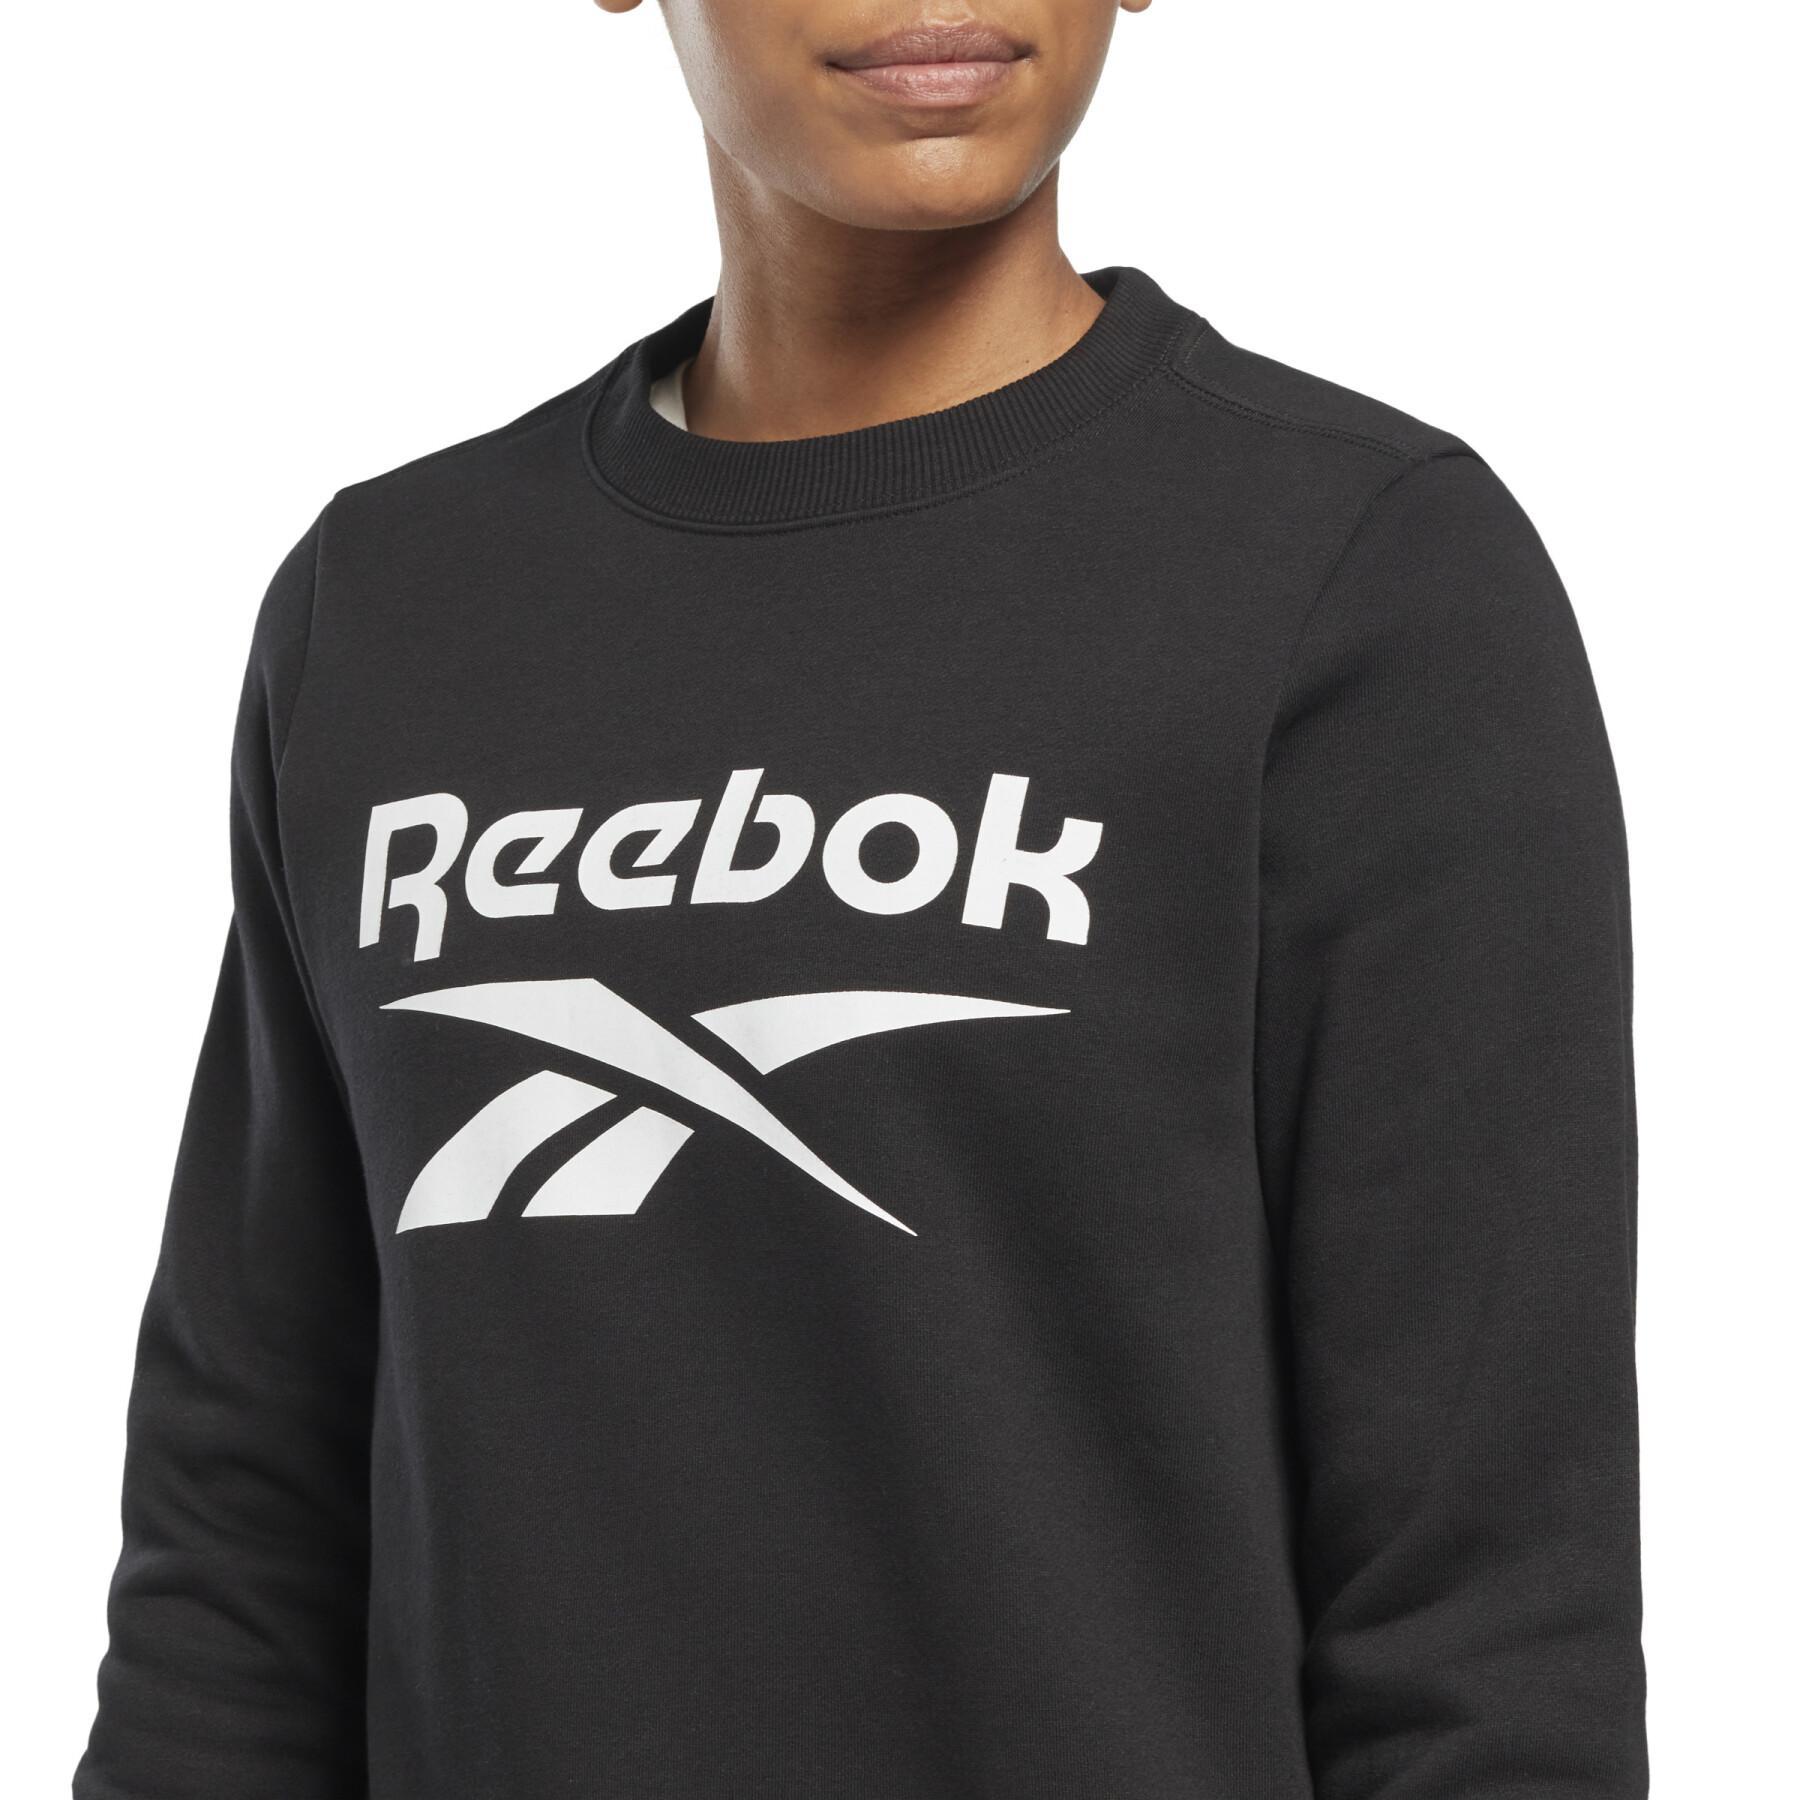 Women's fleece crew neck sweatshirt Reebok Identity Big Logo